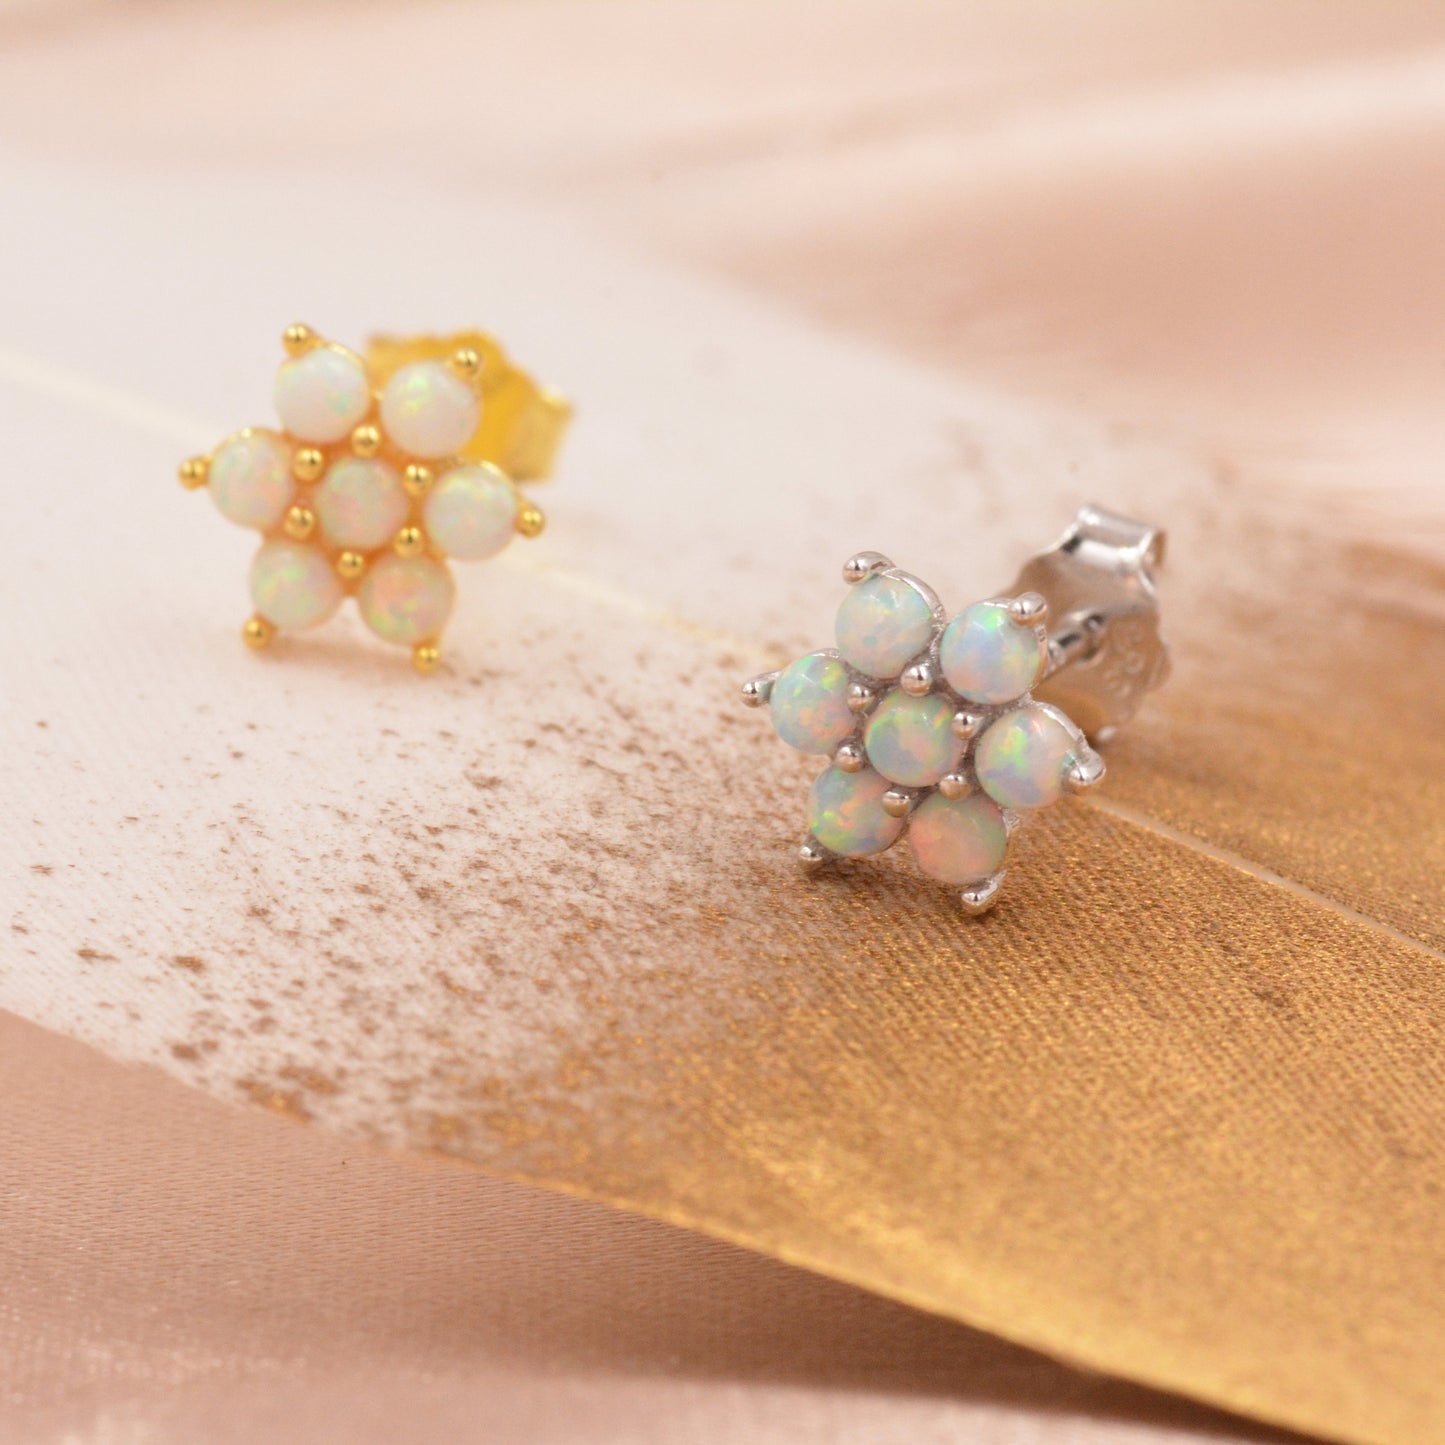 Opal Flower Stud Earrings in Sterling Silver - Gold or Silver - Opal Snowflake - 7 Opal Cluster - Petite Stud Earrings